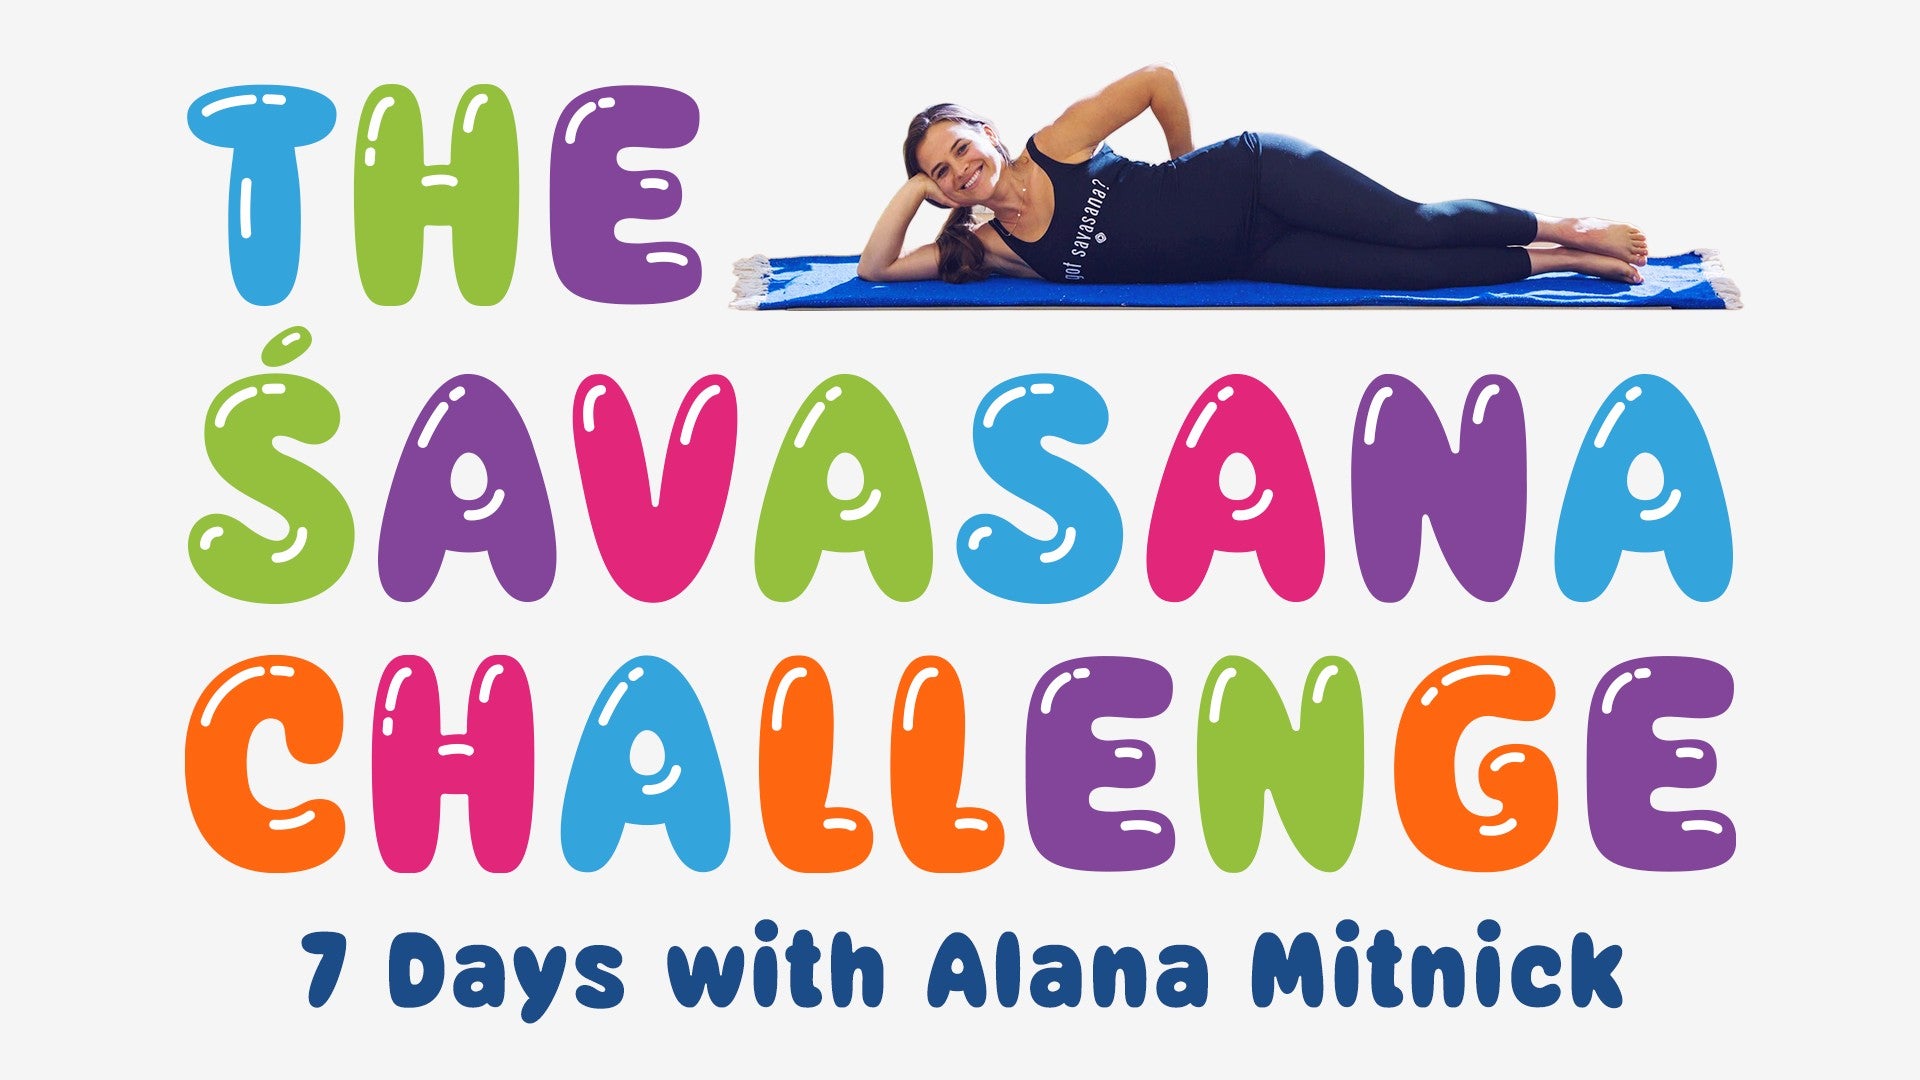 The Savasana Challenge Artwork